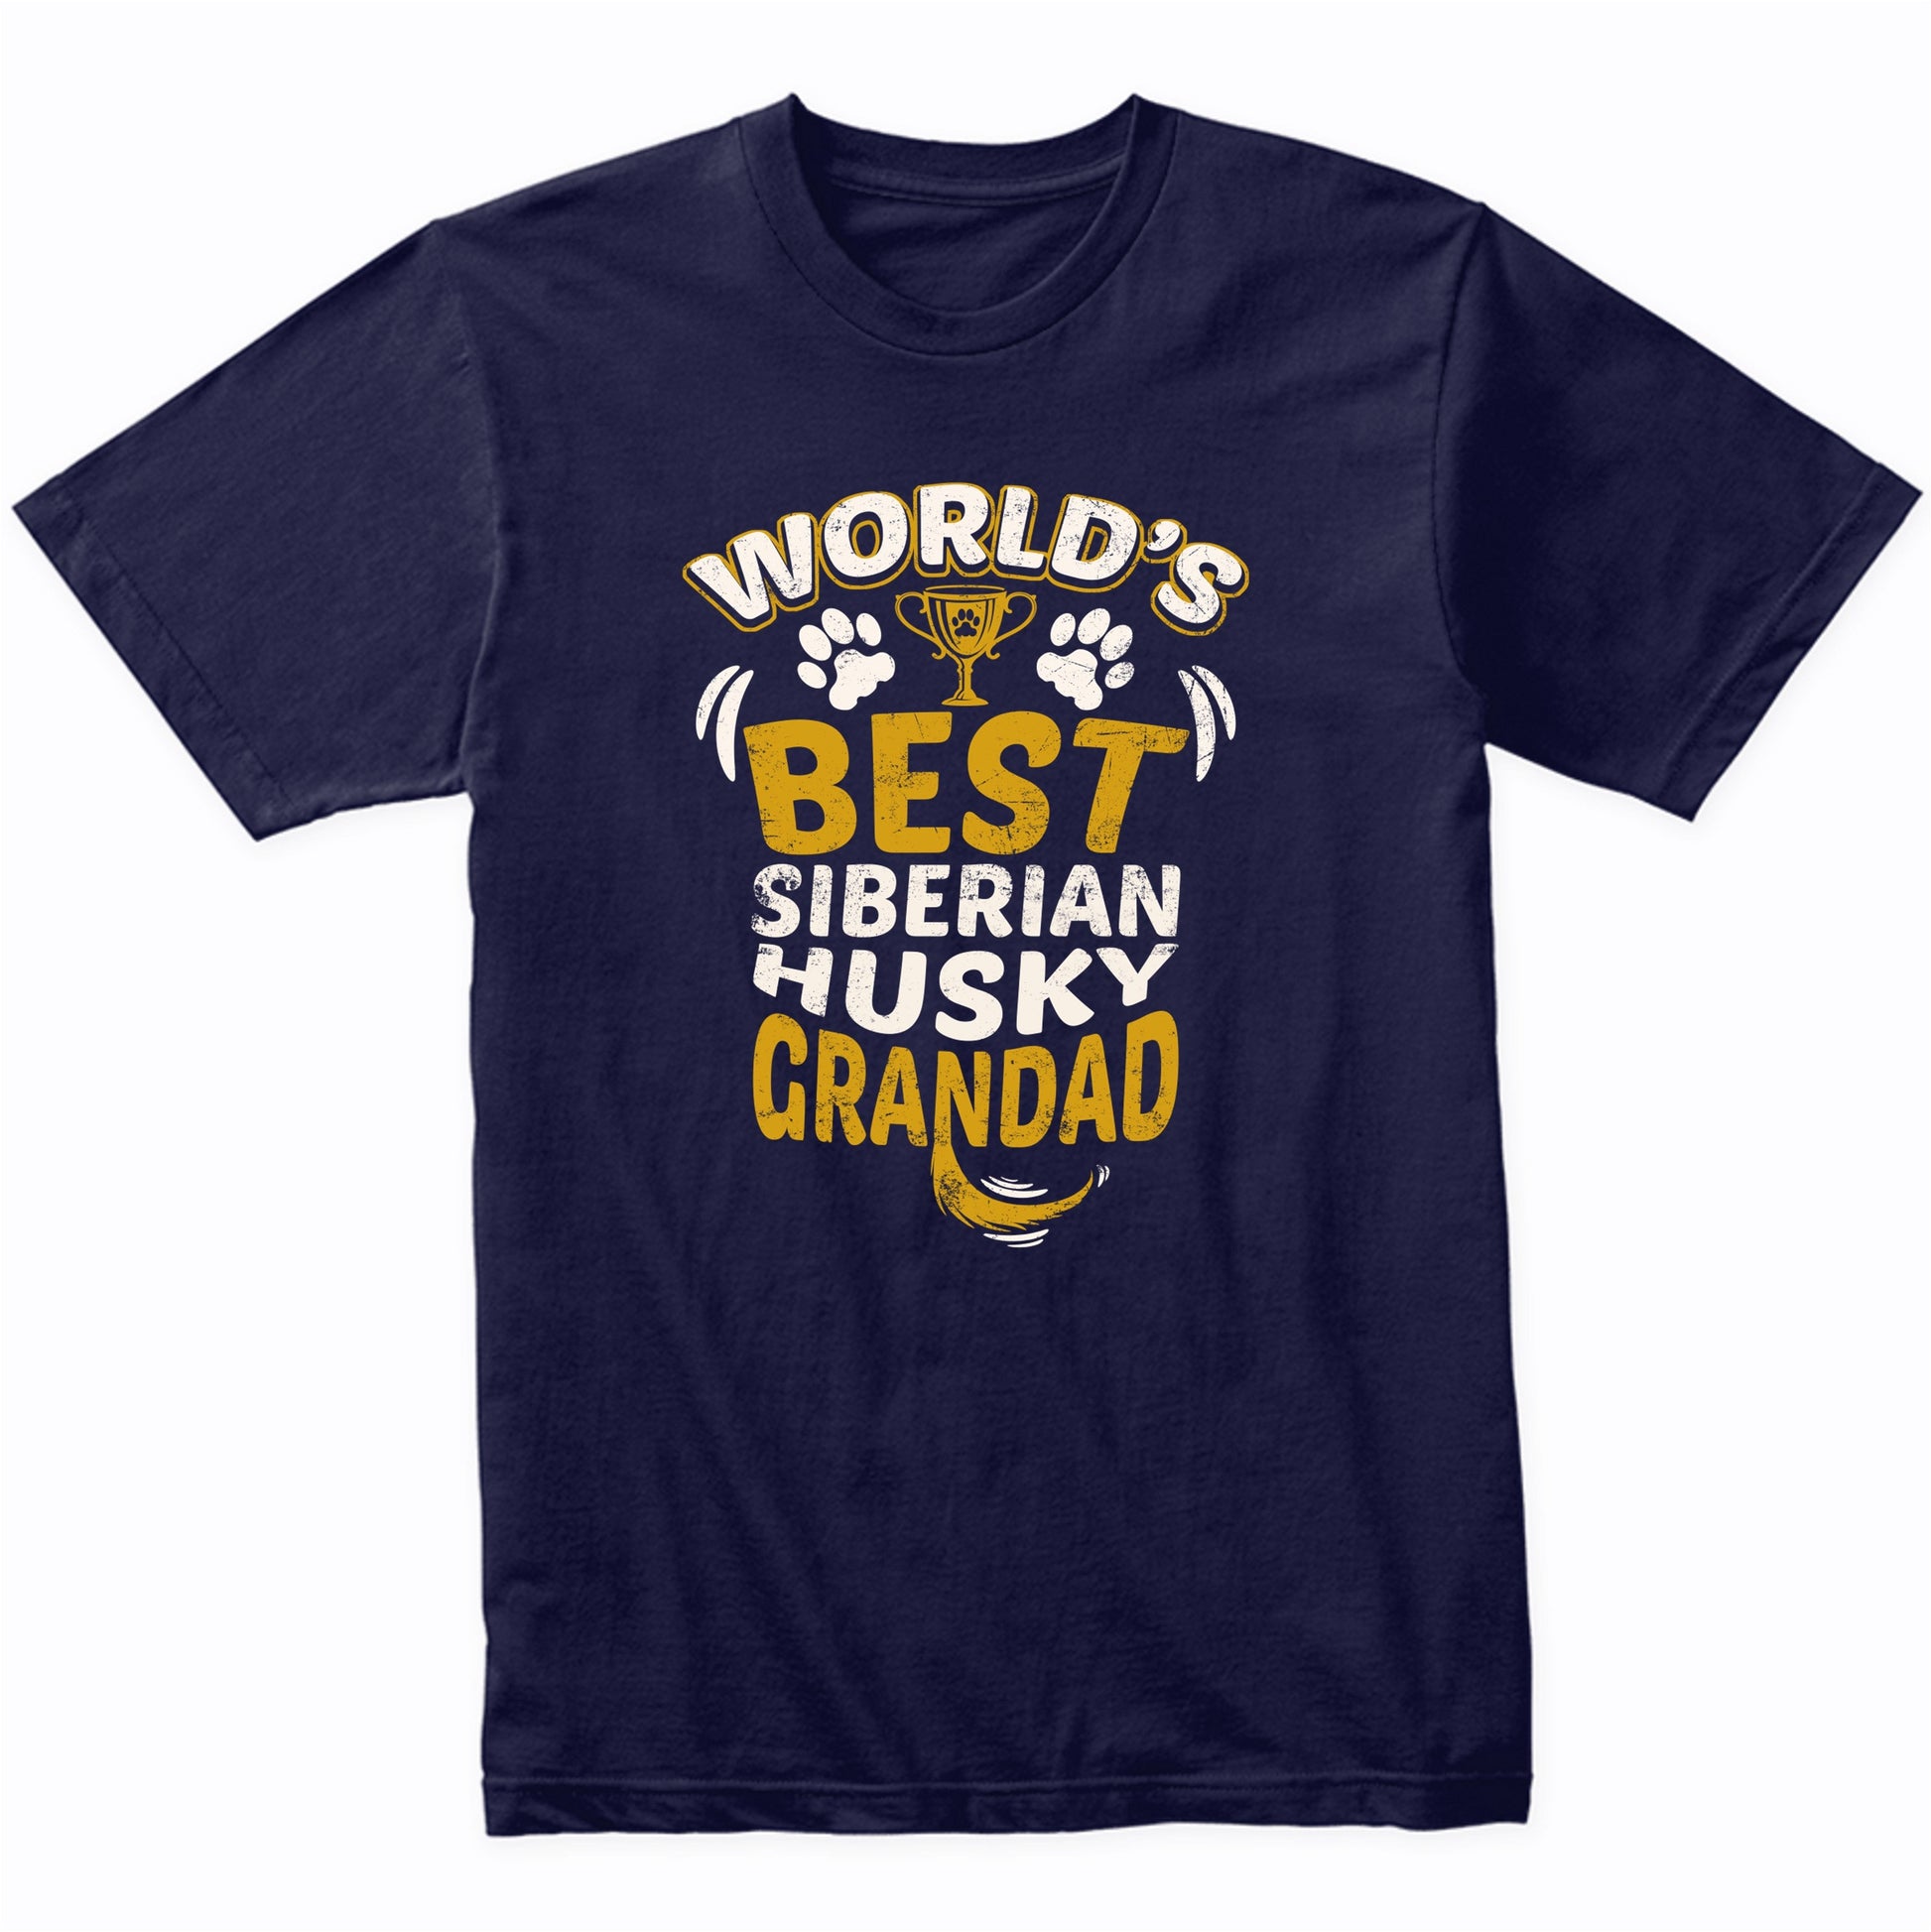 World's Best Siberian Husky Grandad Graphic T-Shirt